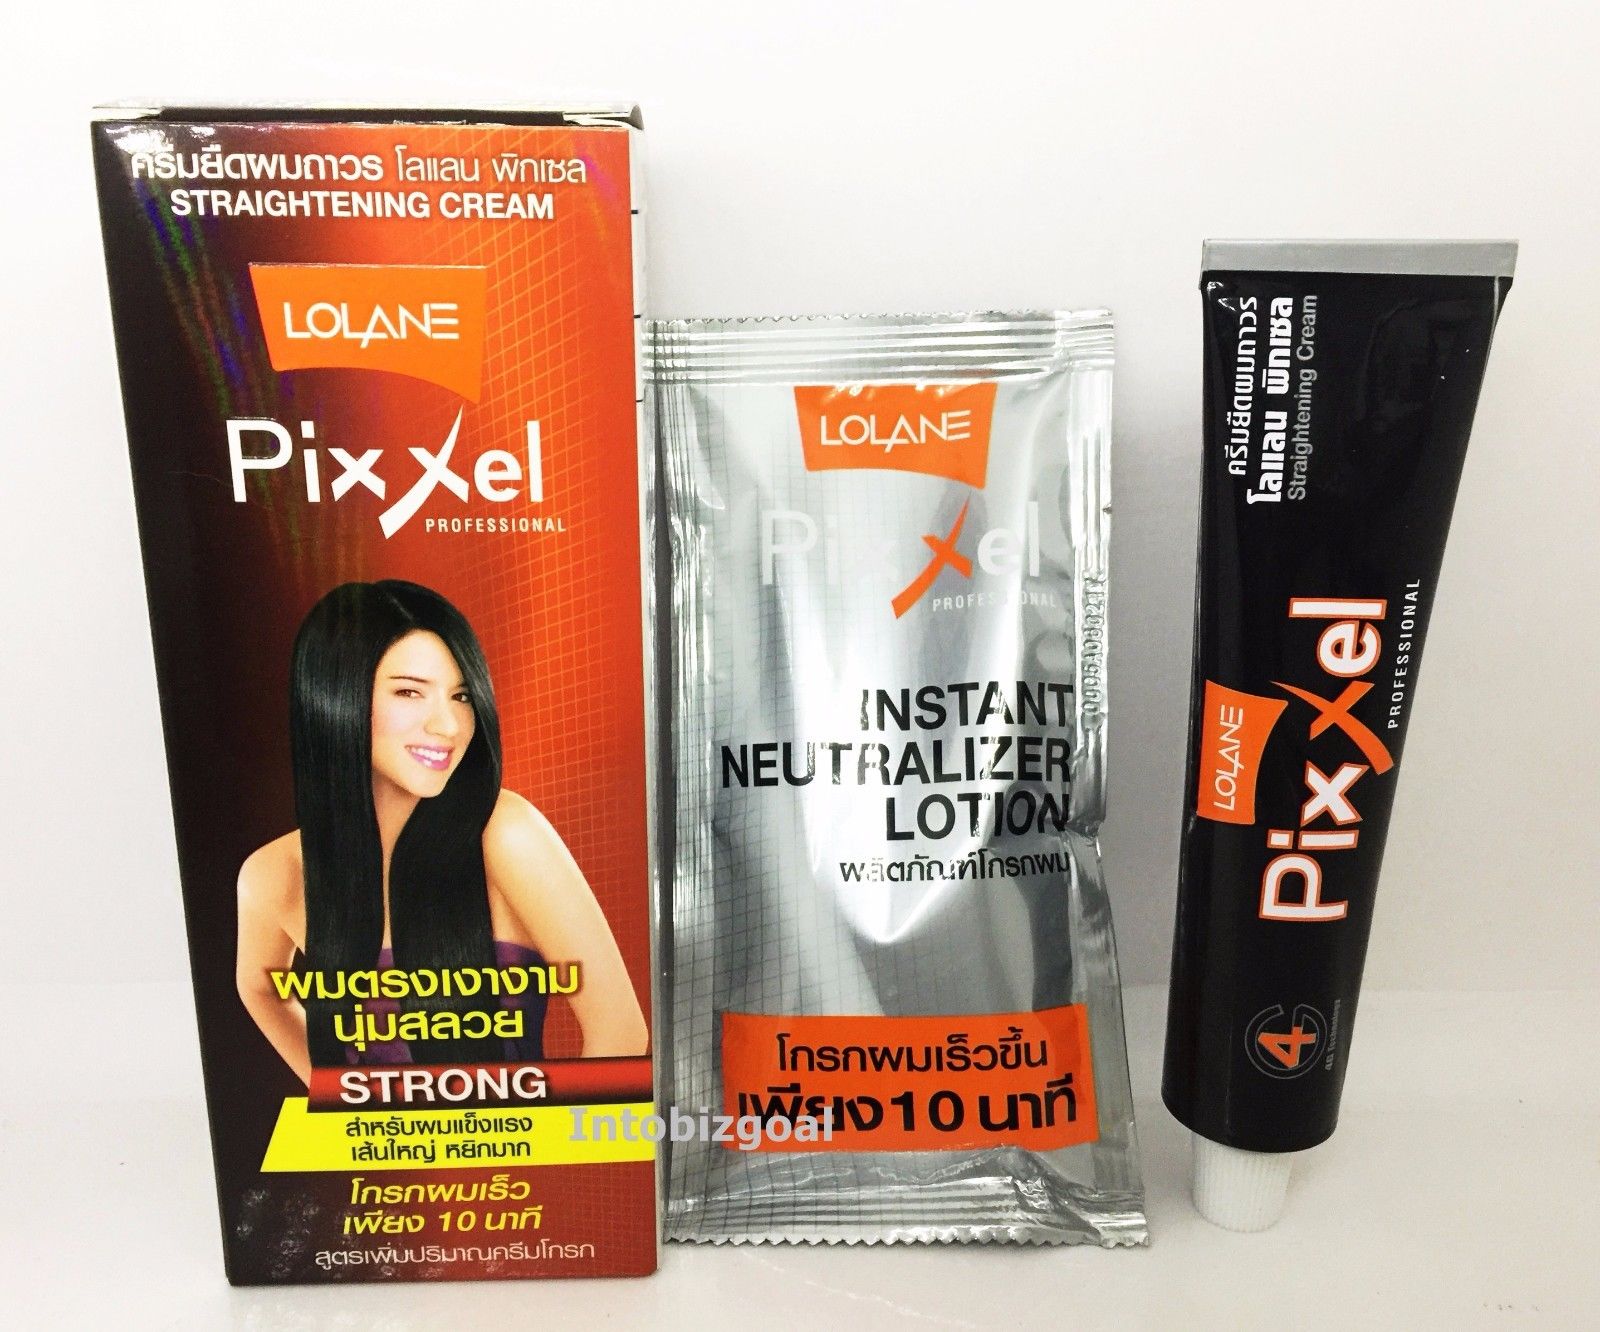 Lolane Pixxel Hair Straightening Cream Price In Bangladesh 